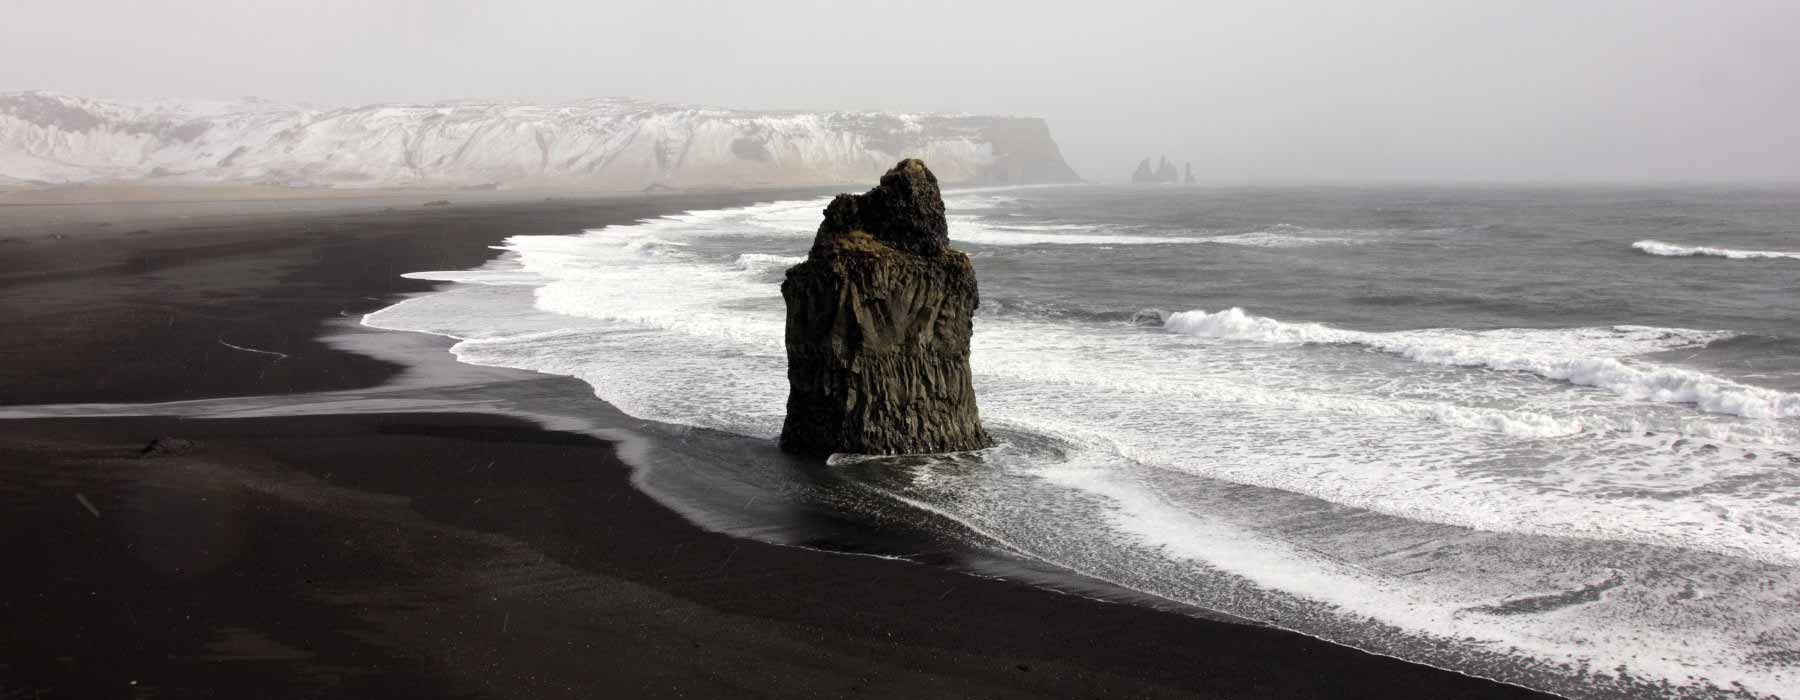 All our Iceland Itinerary<br class="hidden-md hidden-lg" /> holidays